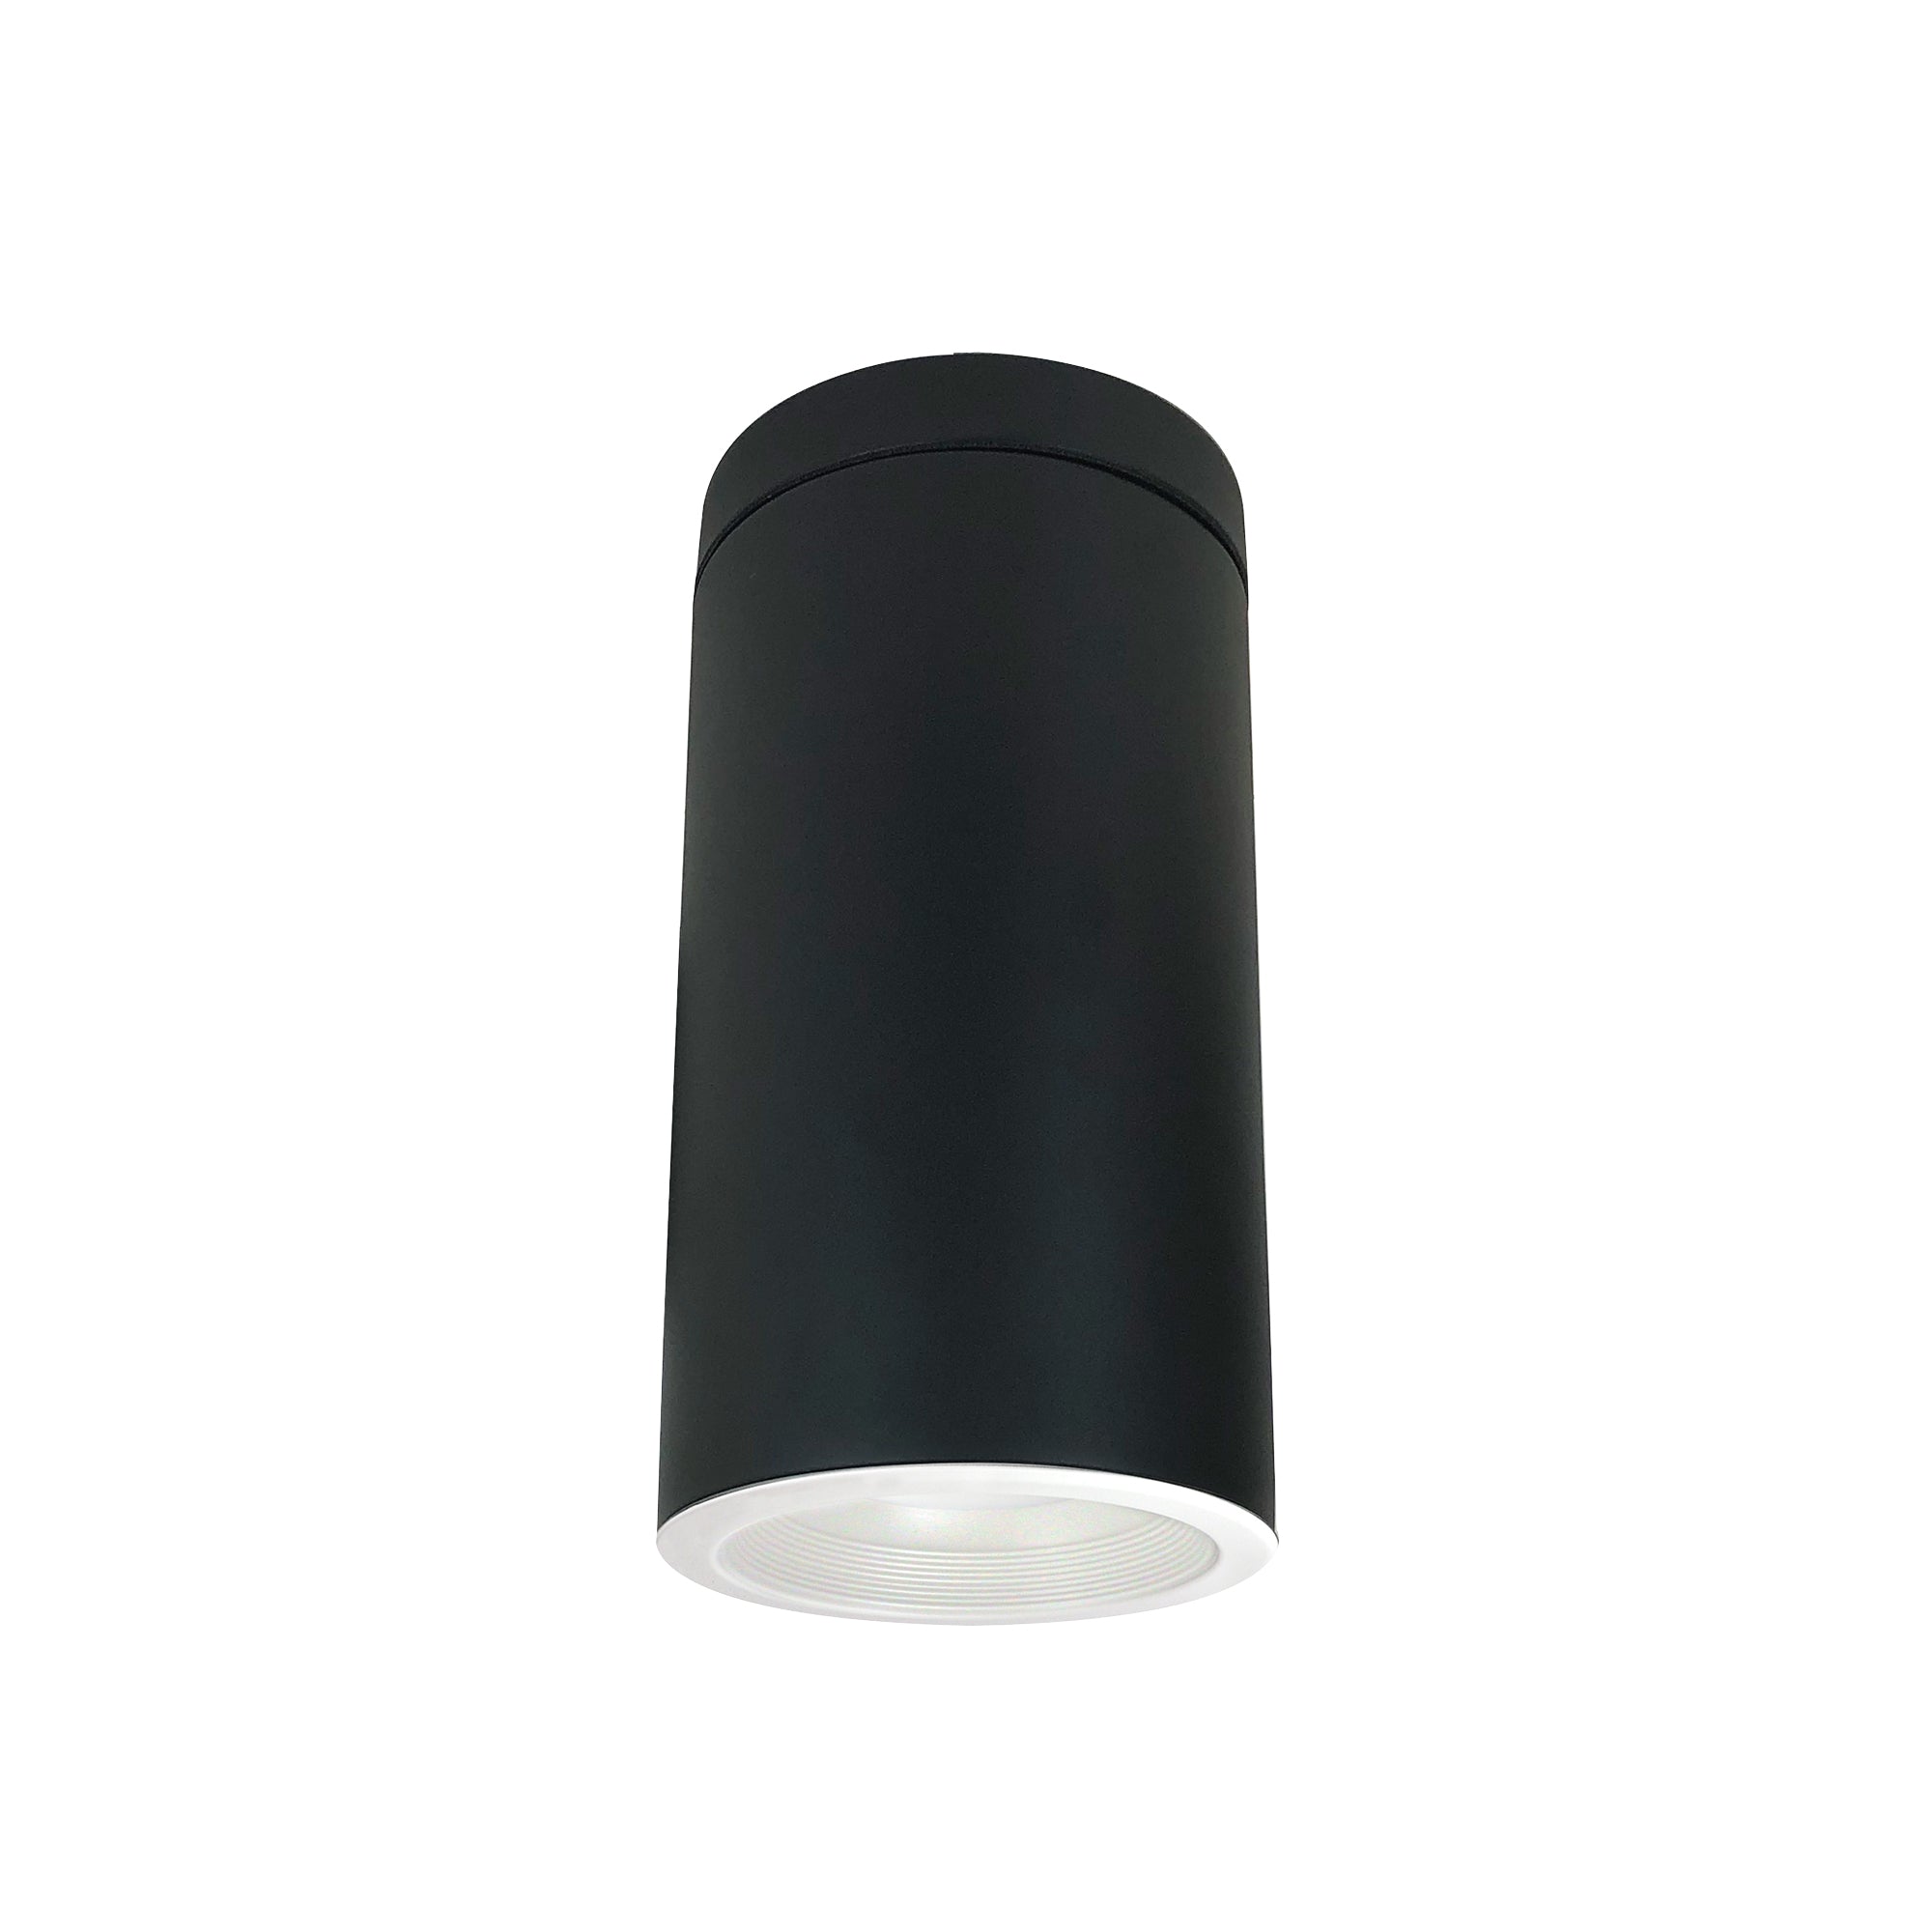 Nora Lighting NYLI-6SL251WWB - Cylinder - 6 Inch Cylinder, Black, Surface Mount, 25W Med Base LED, Ref., White